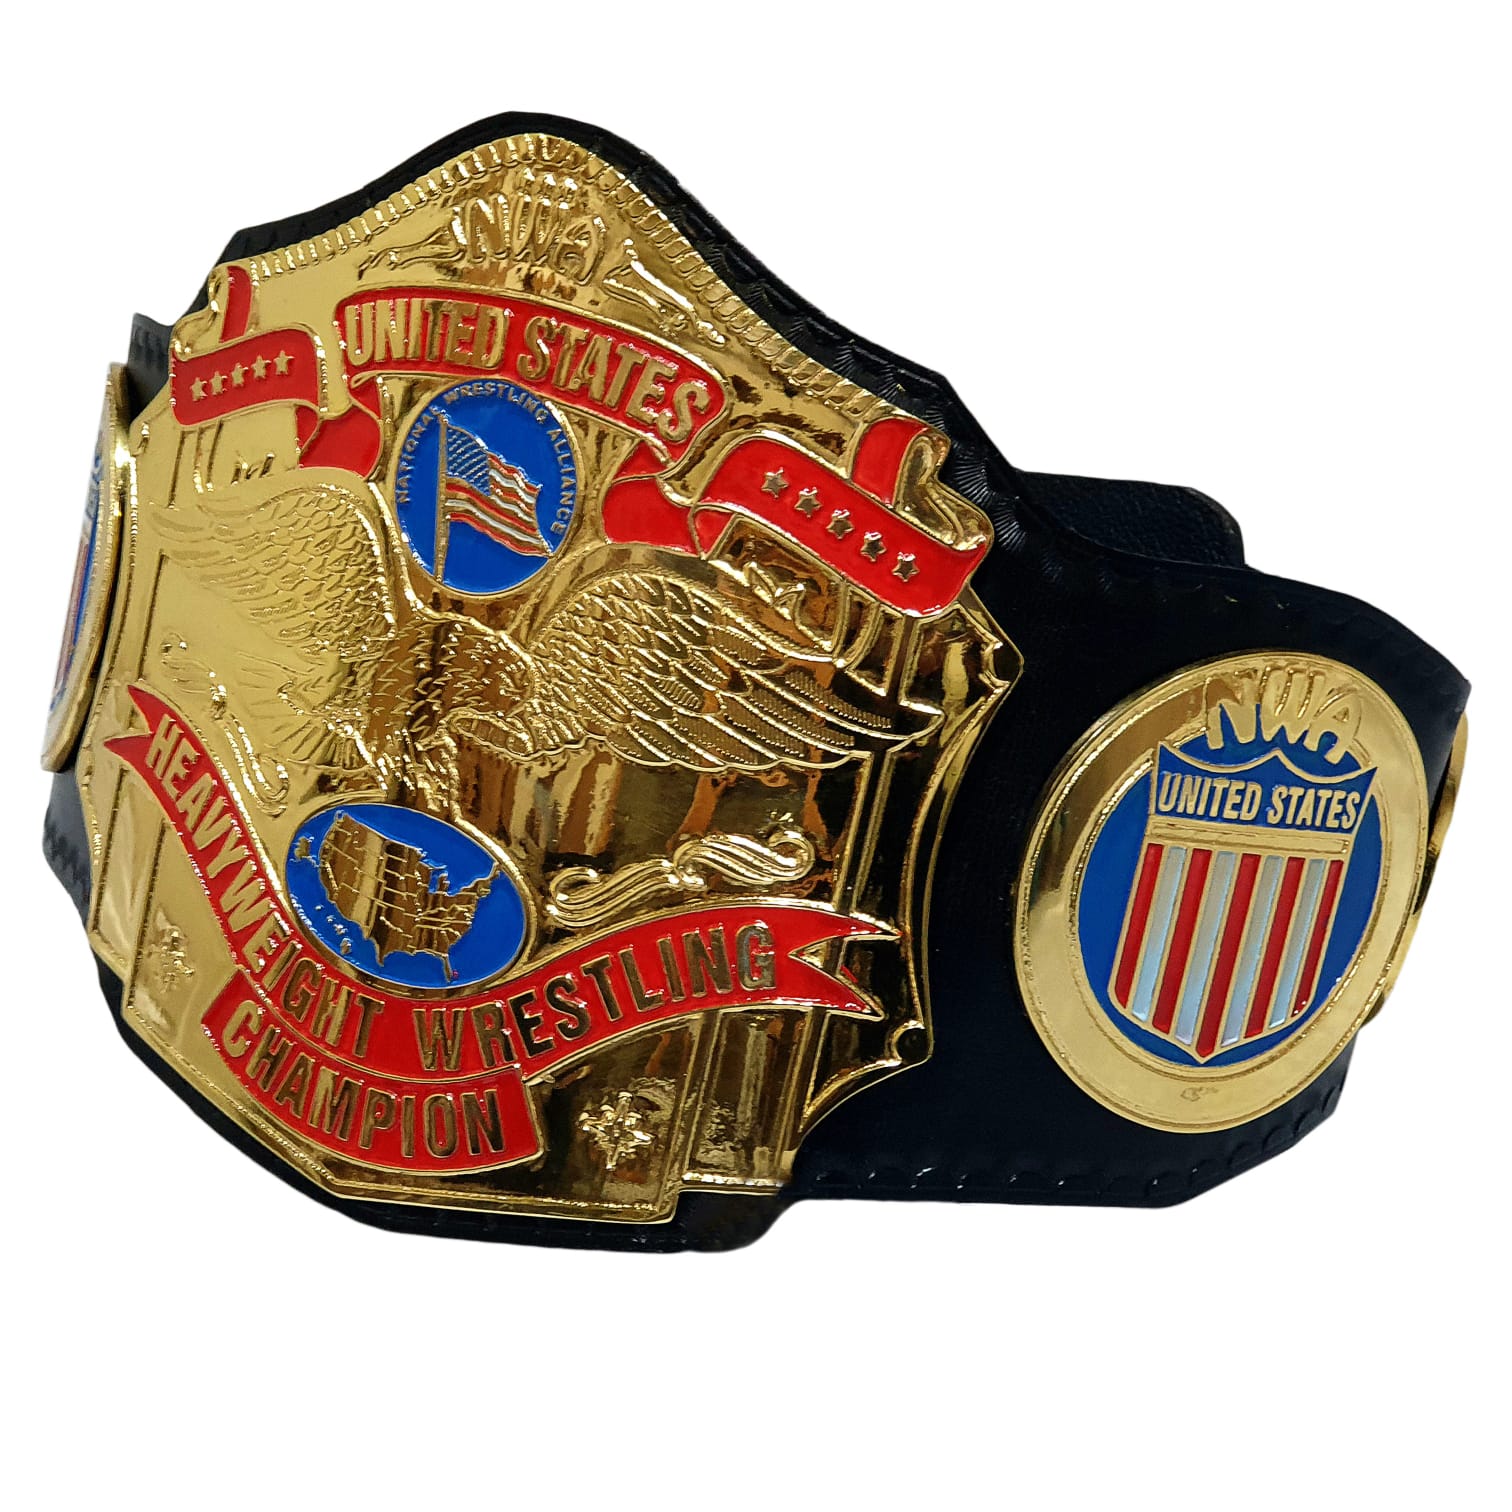 World  intercontinental Wrestling Championship Belt 2MM-002